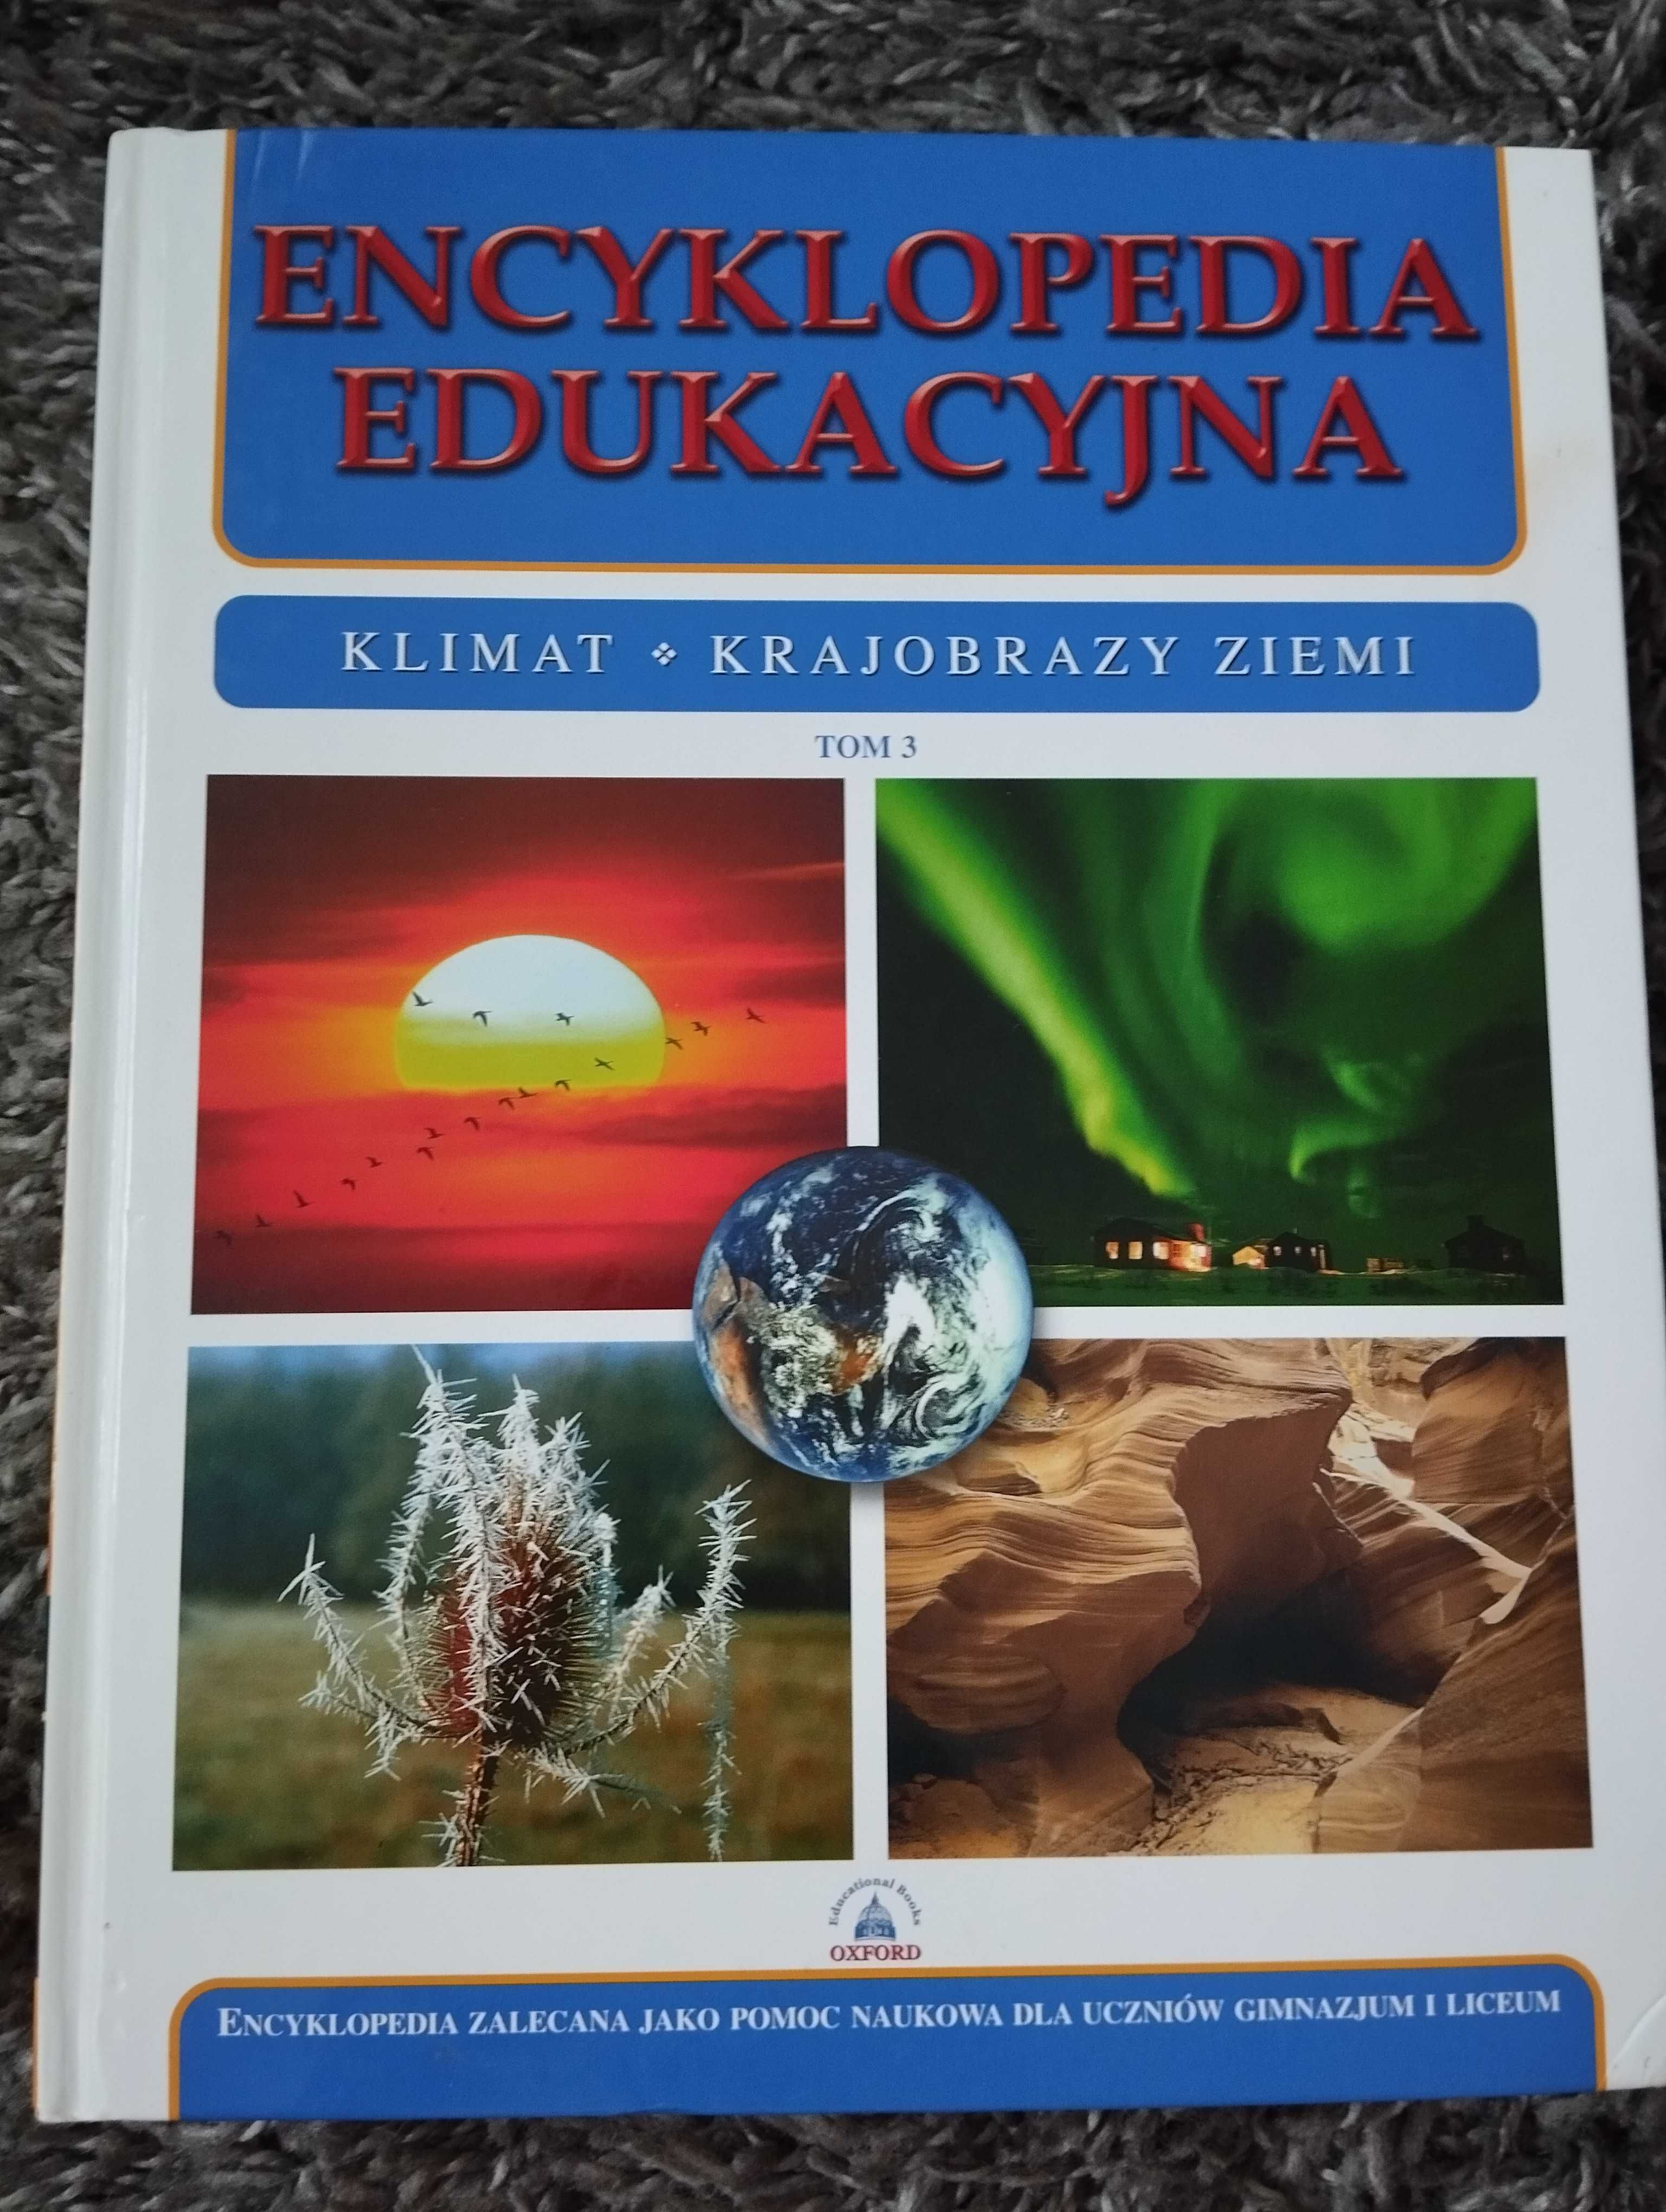 Encyklopedia edukacyjna tom 3